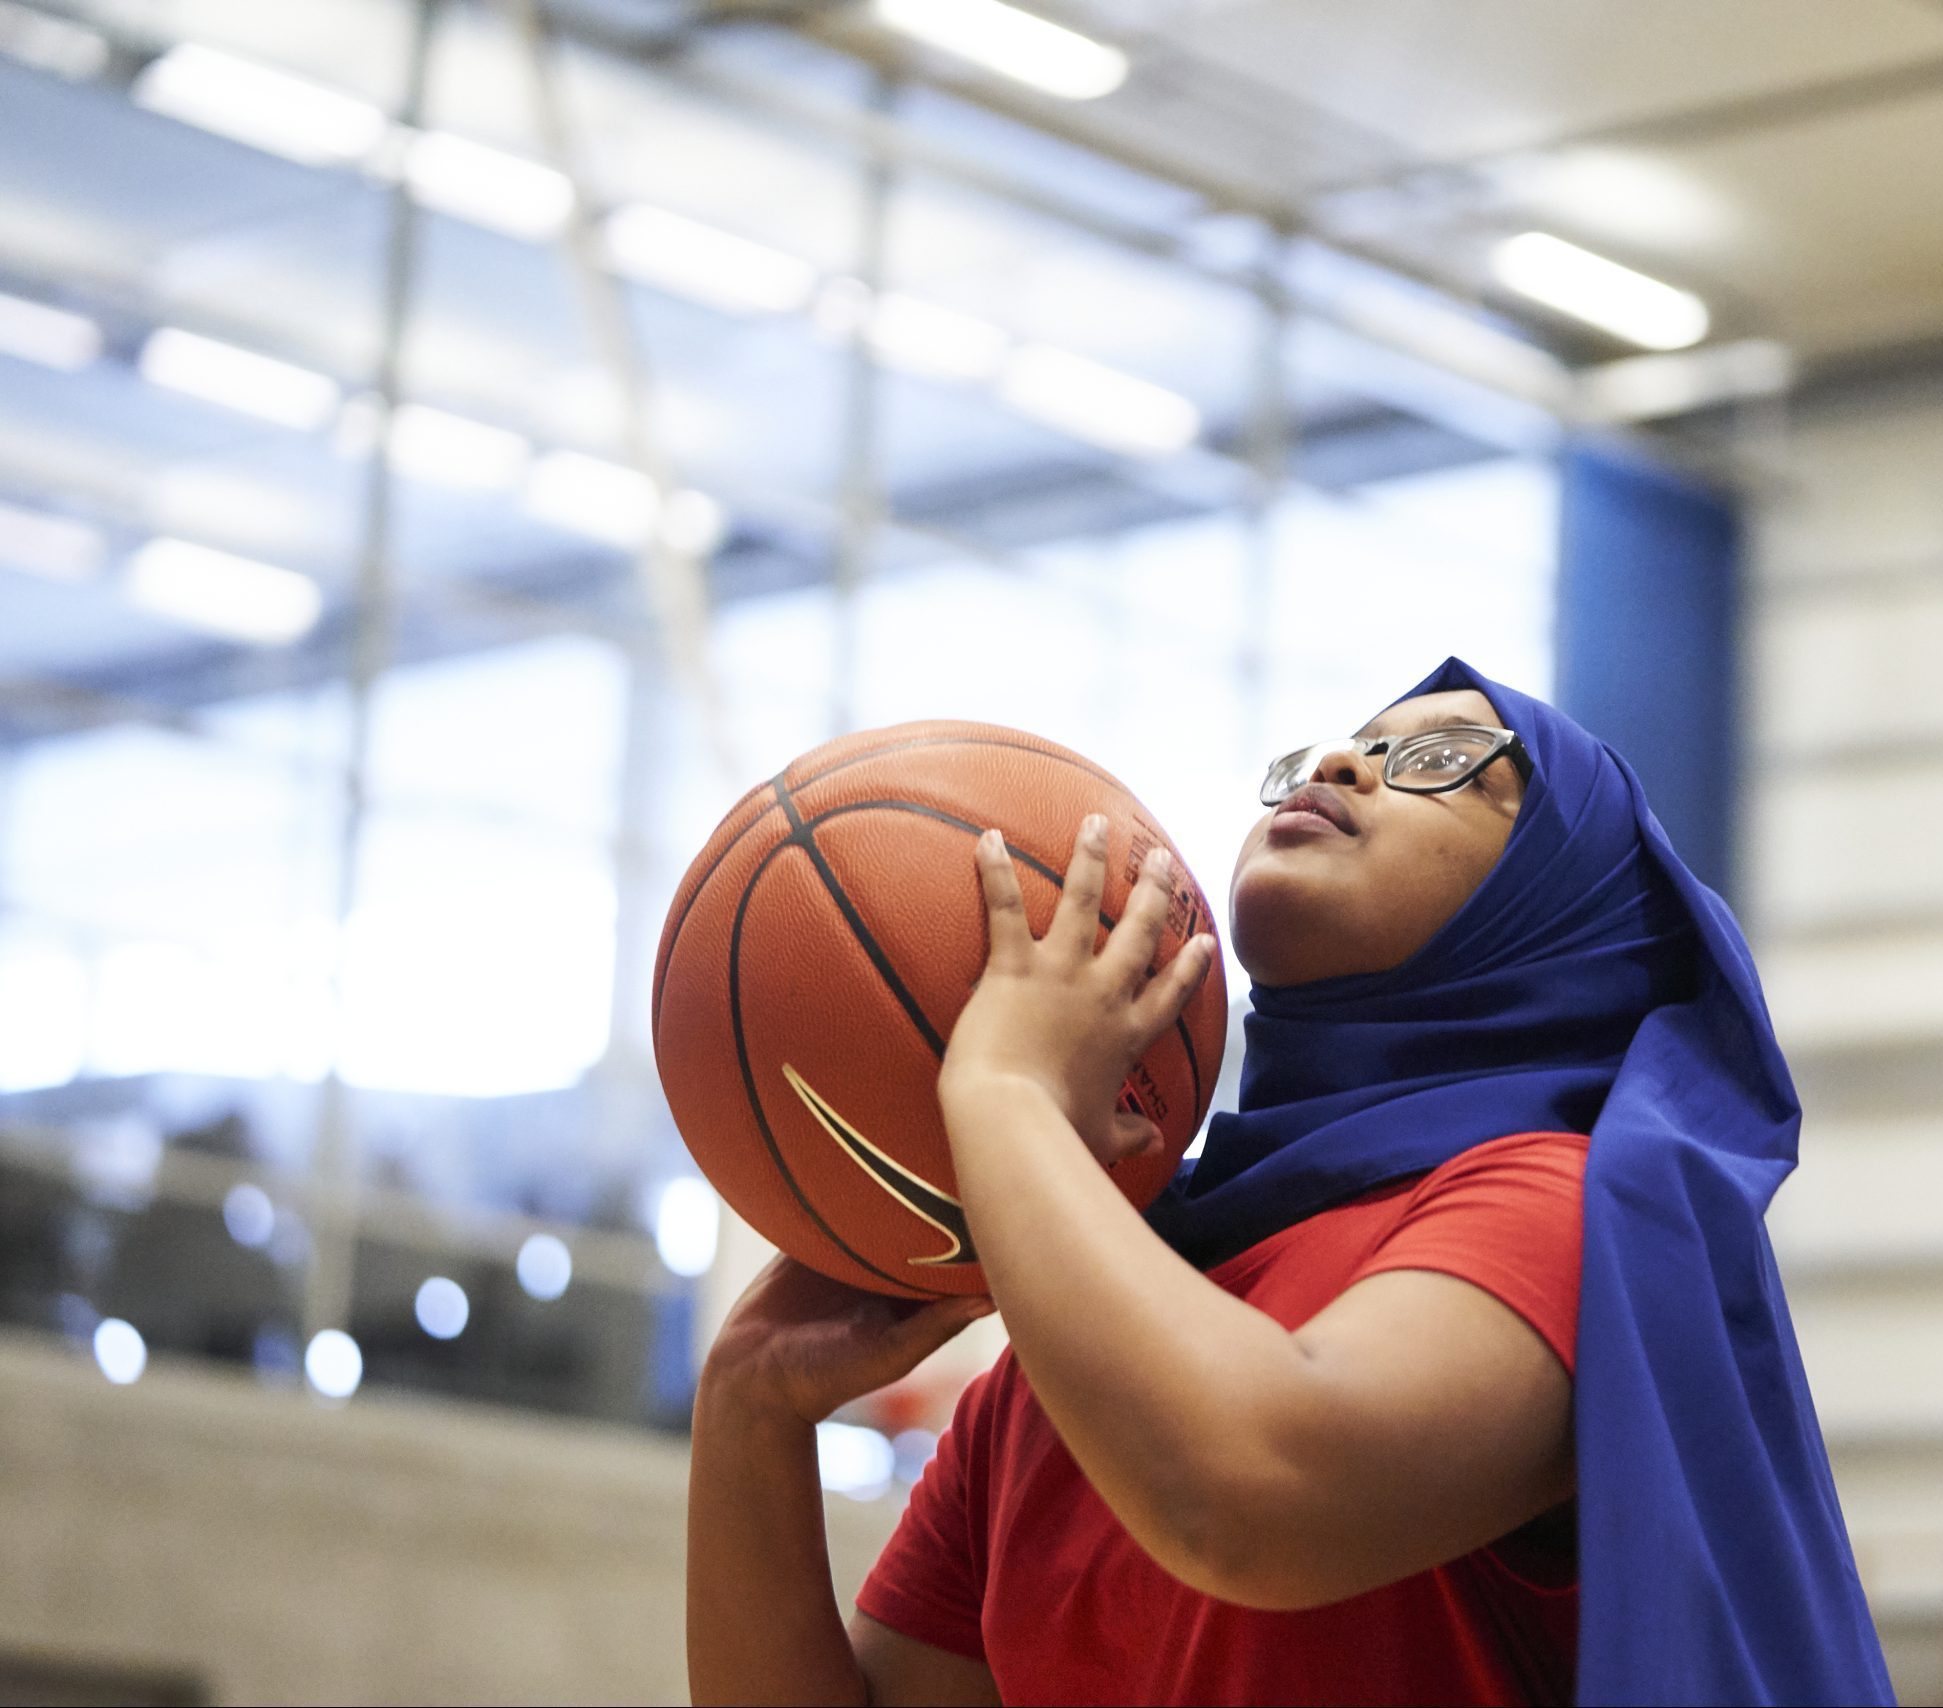 Teenage girl wearing headscarf shooting the ball in basketball